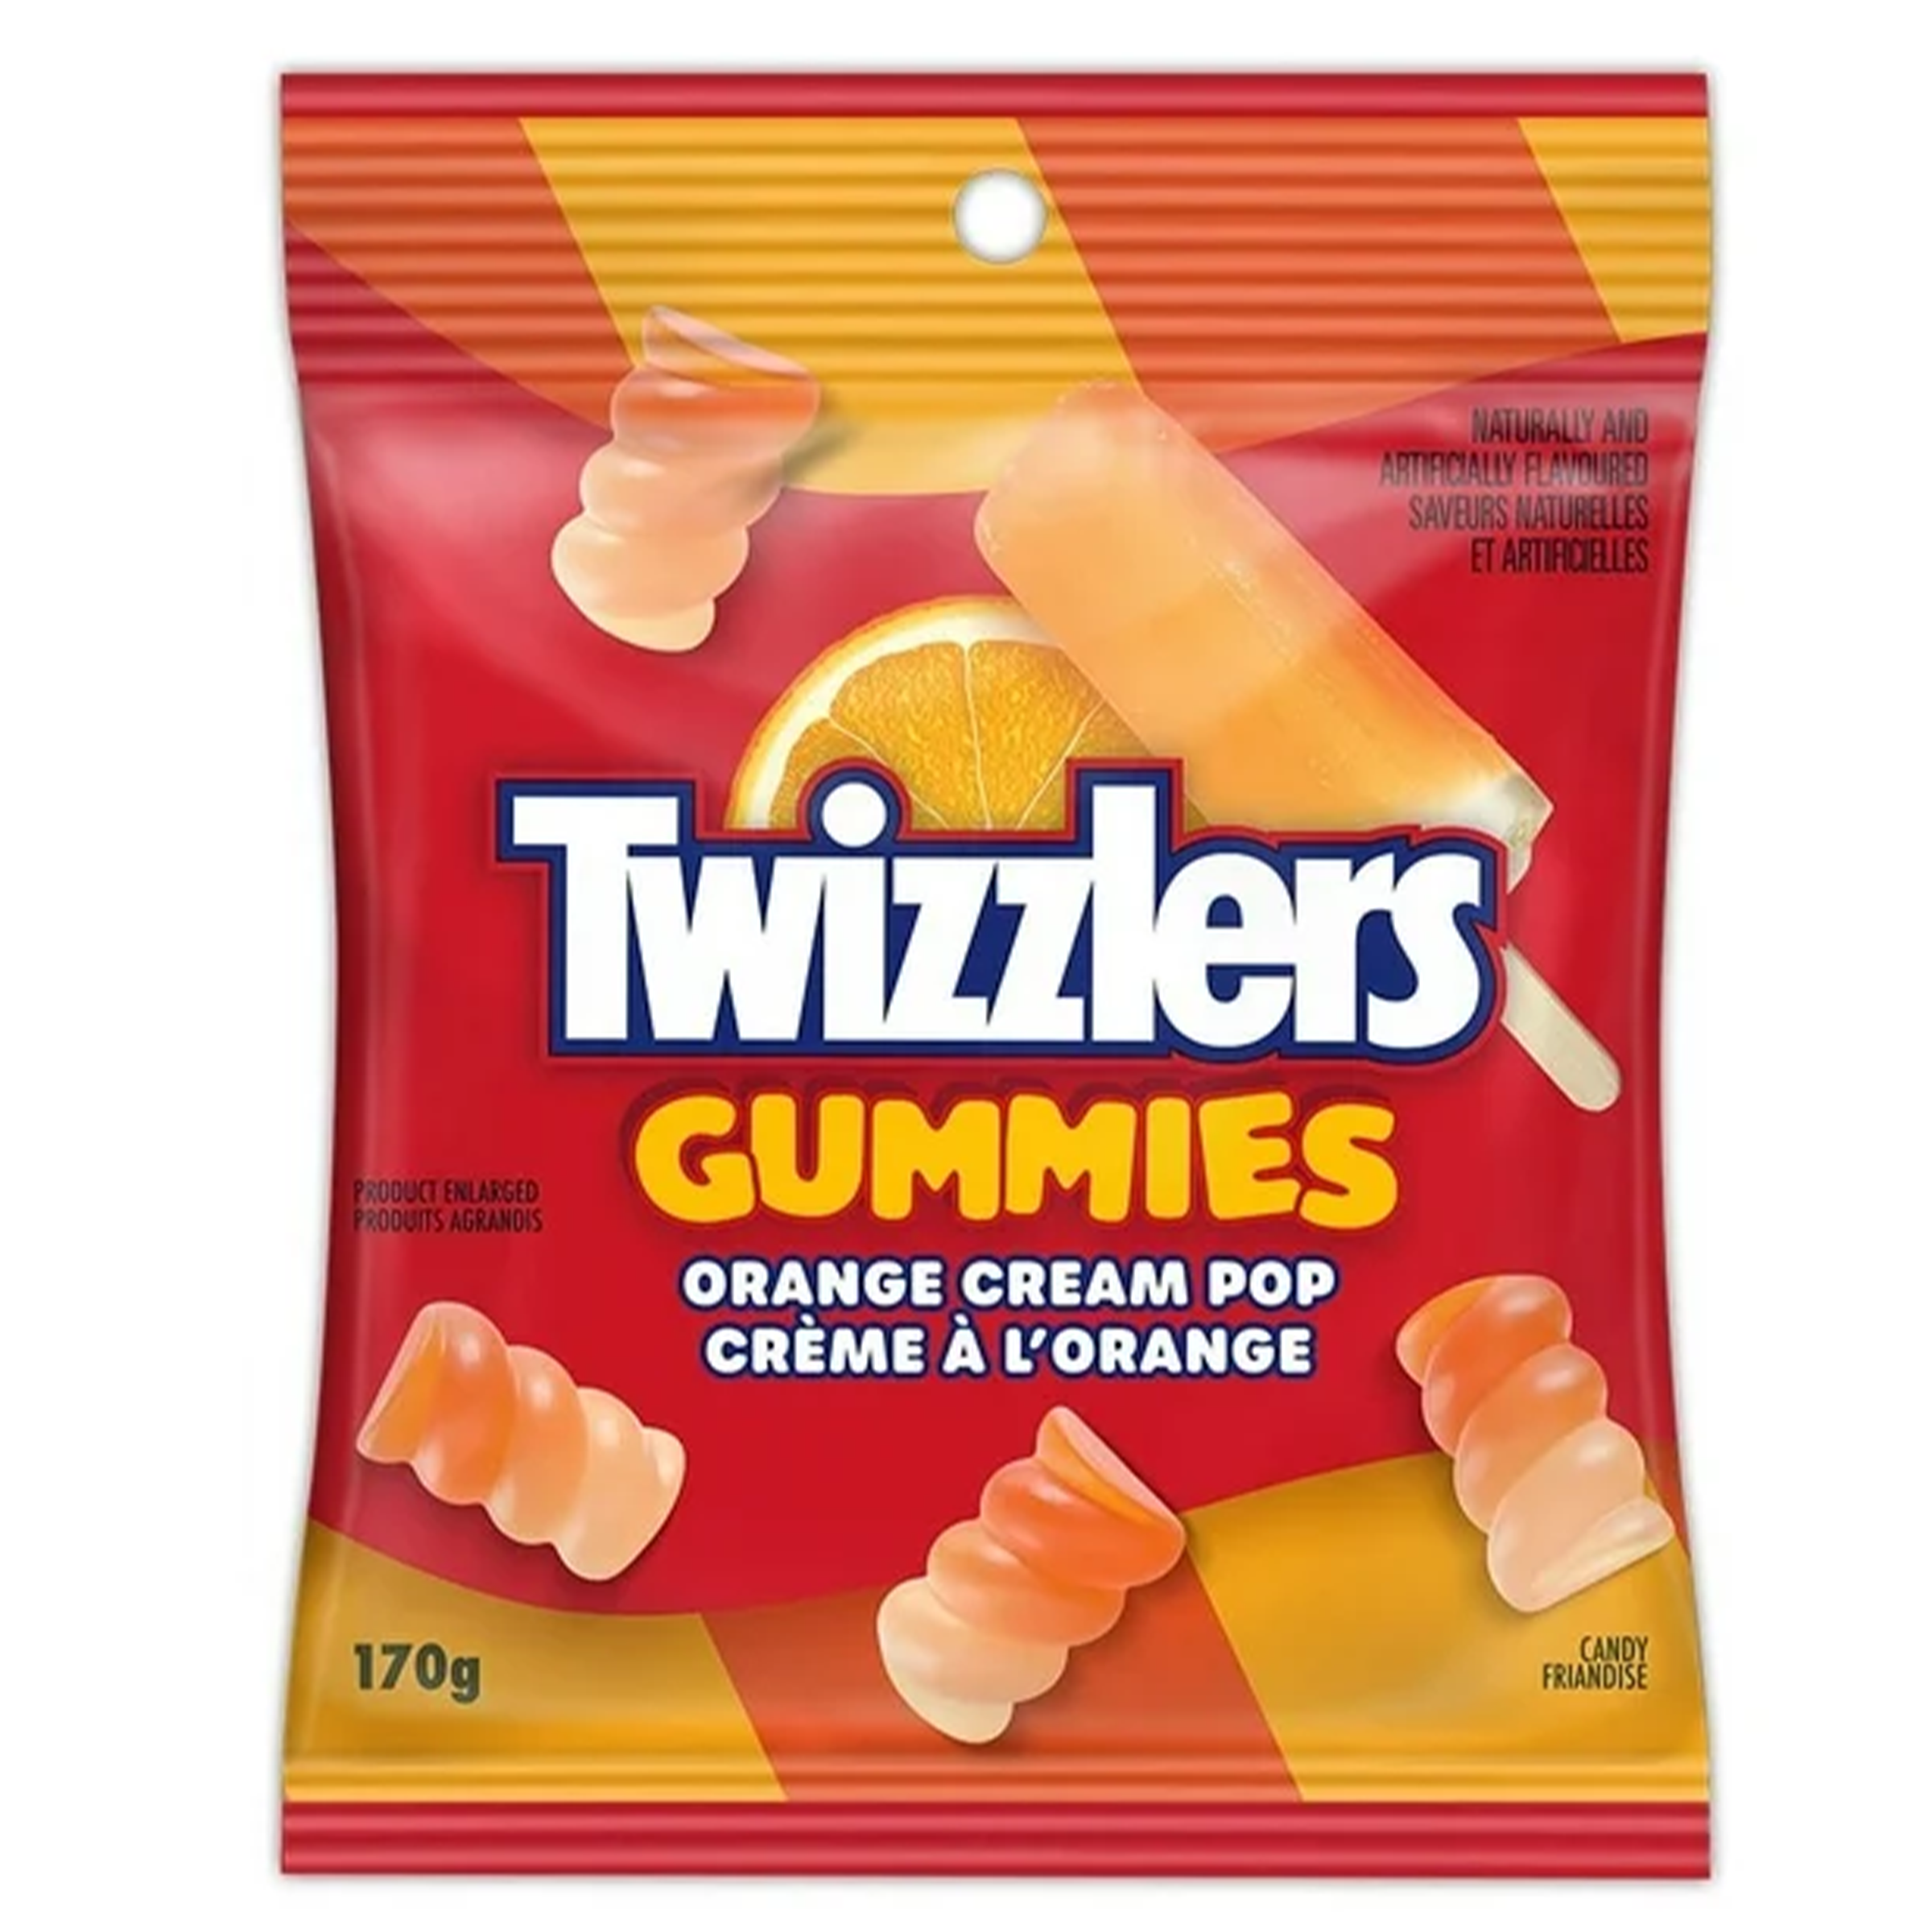 Twizzlers Gummies -  Cream Pop